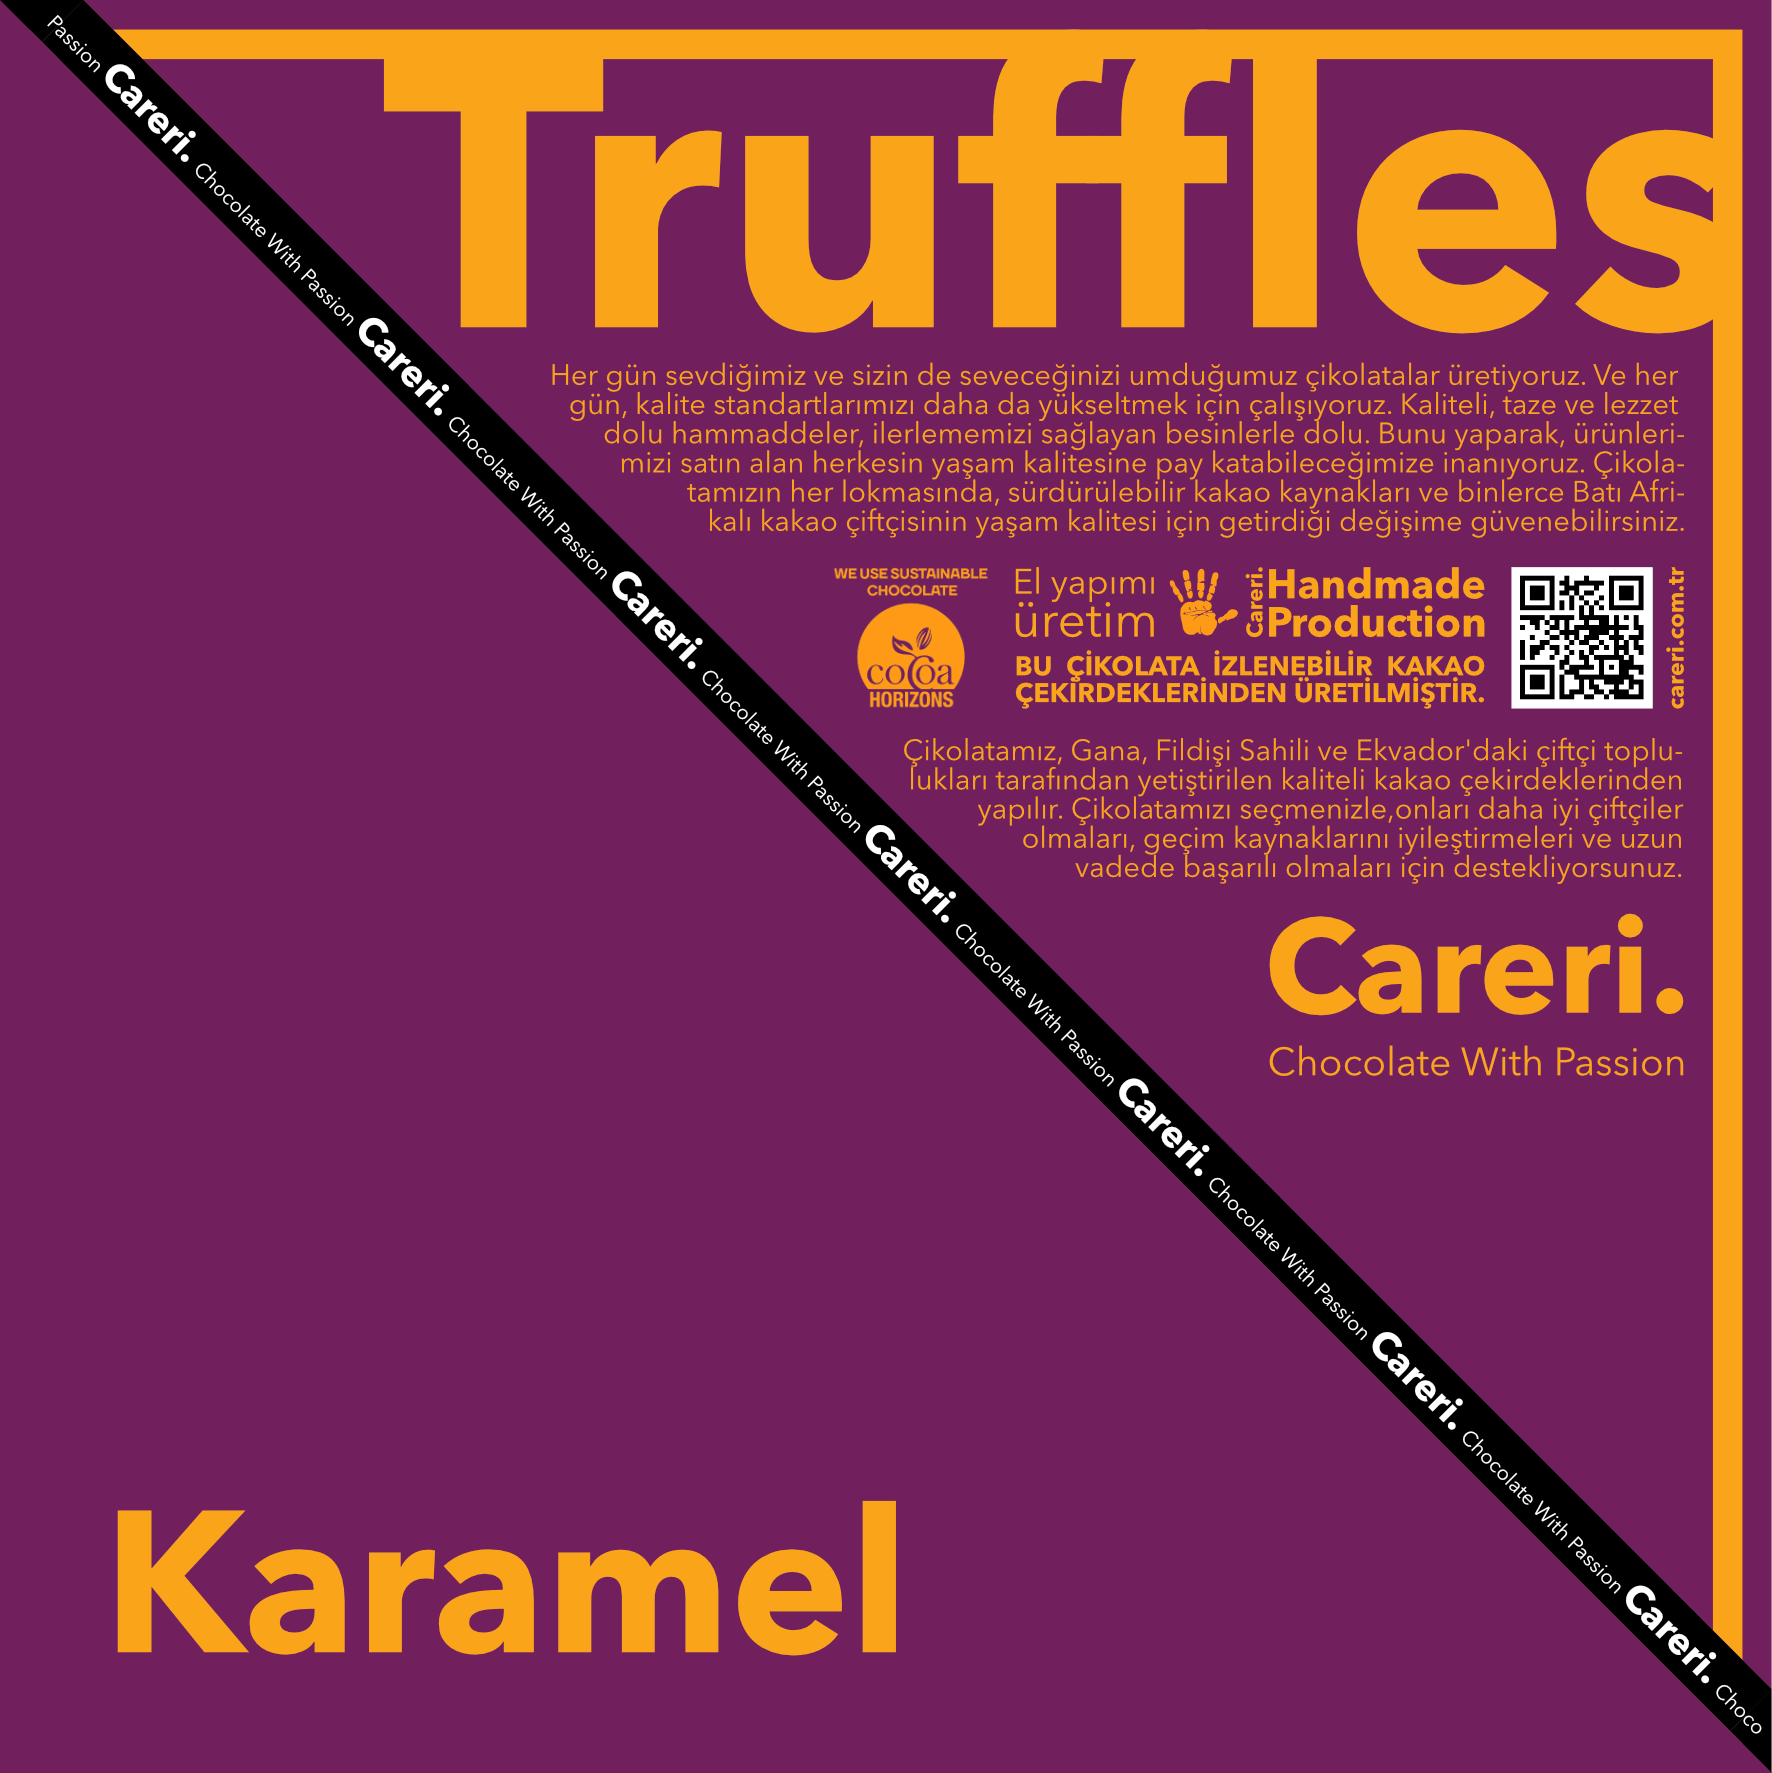 Truffles Karamel